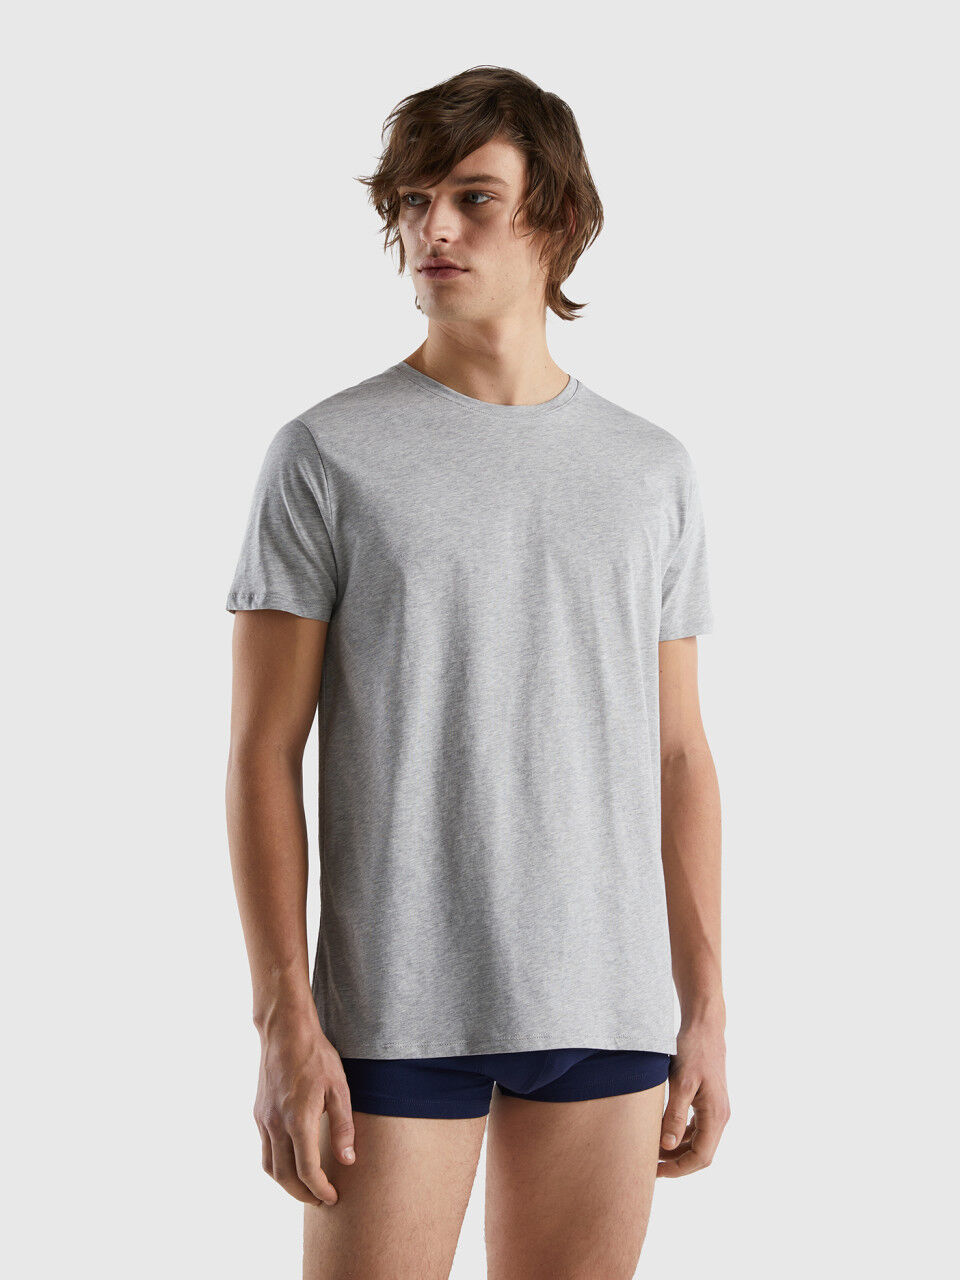 T-Shirt aus langfaseriger Baumwolle